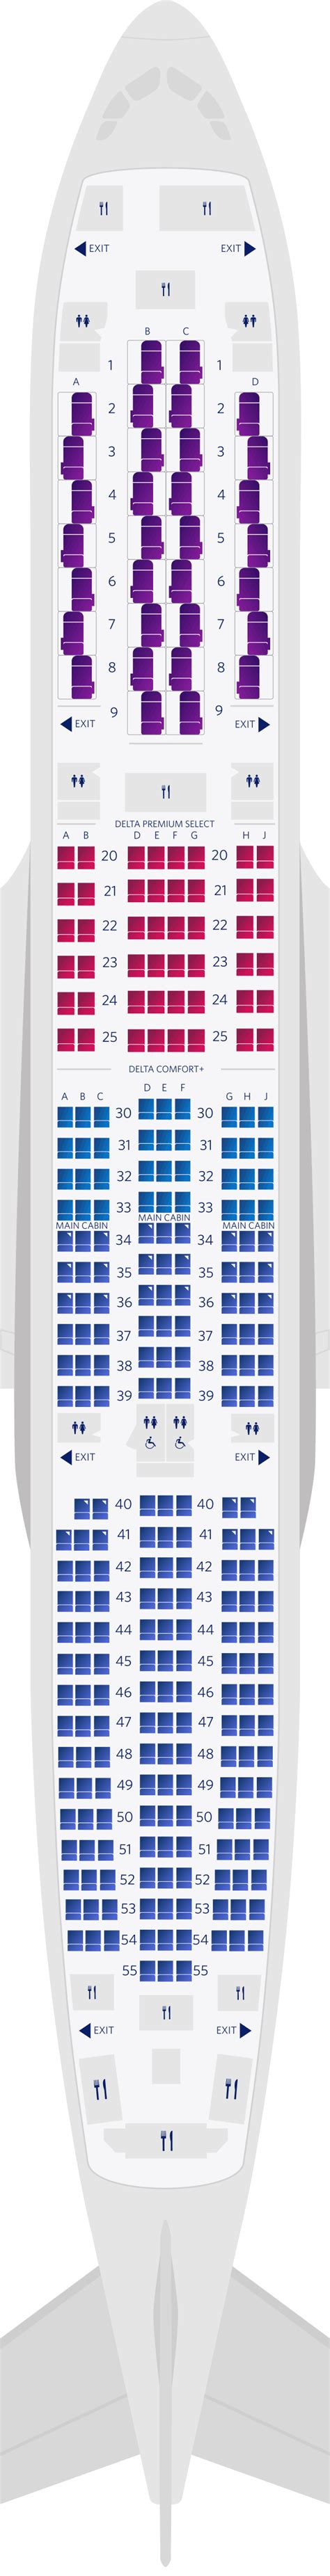 singapore airlines airbus   seating chart tutor suhu